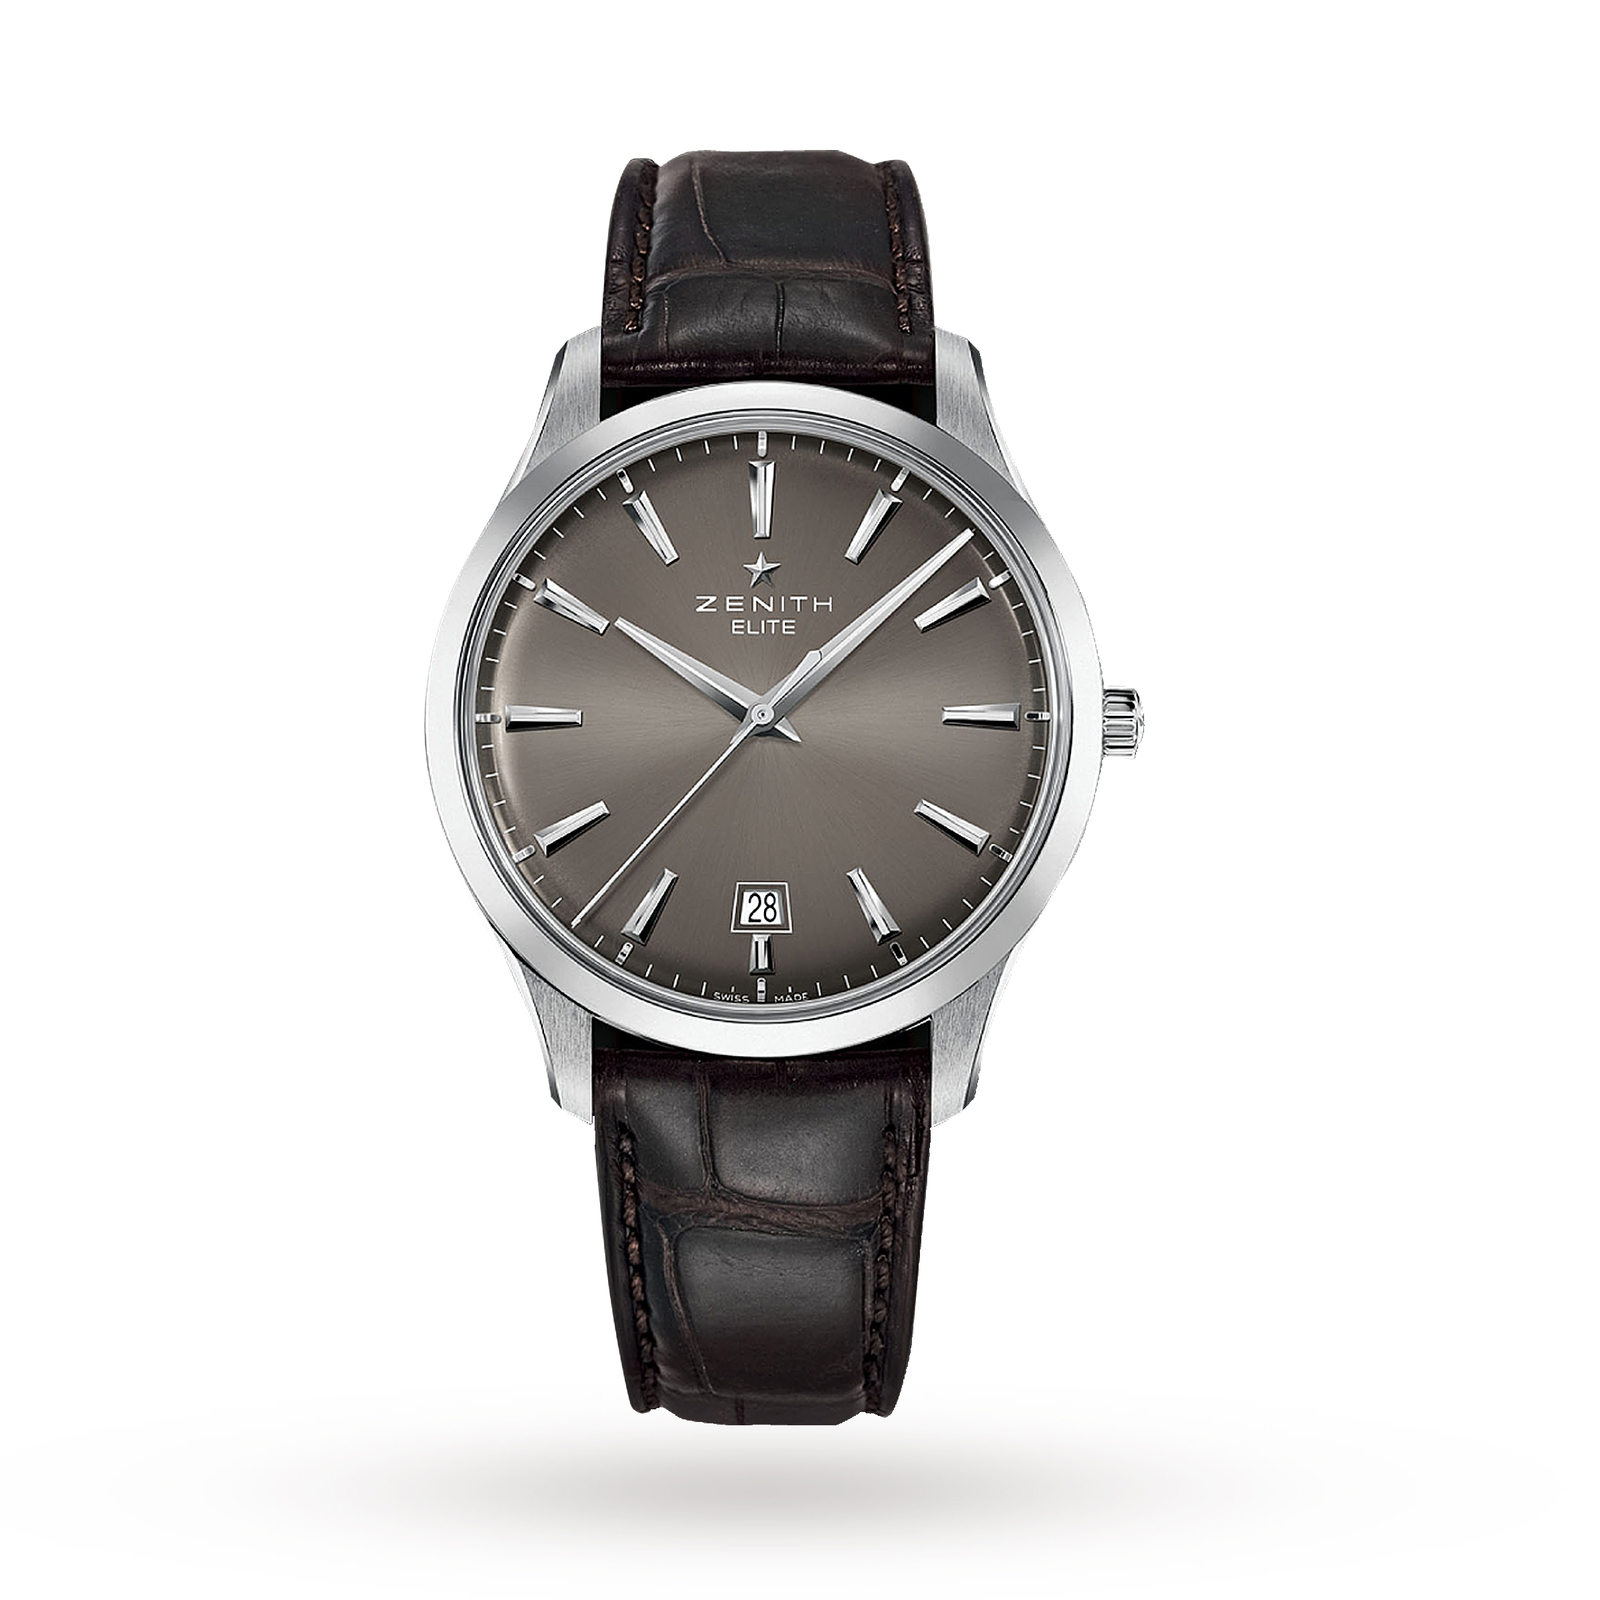 Zenith Elite Central Second | Luxury Watches | Watches | Watches of ...